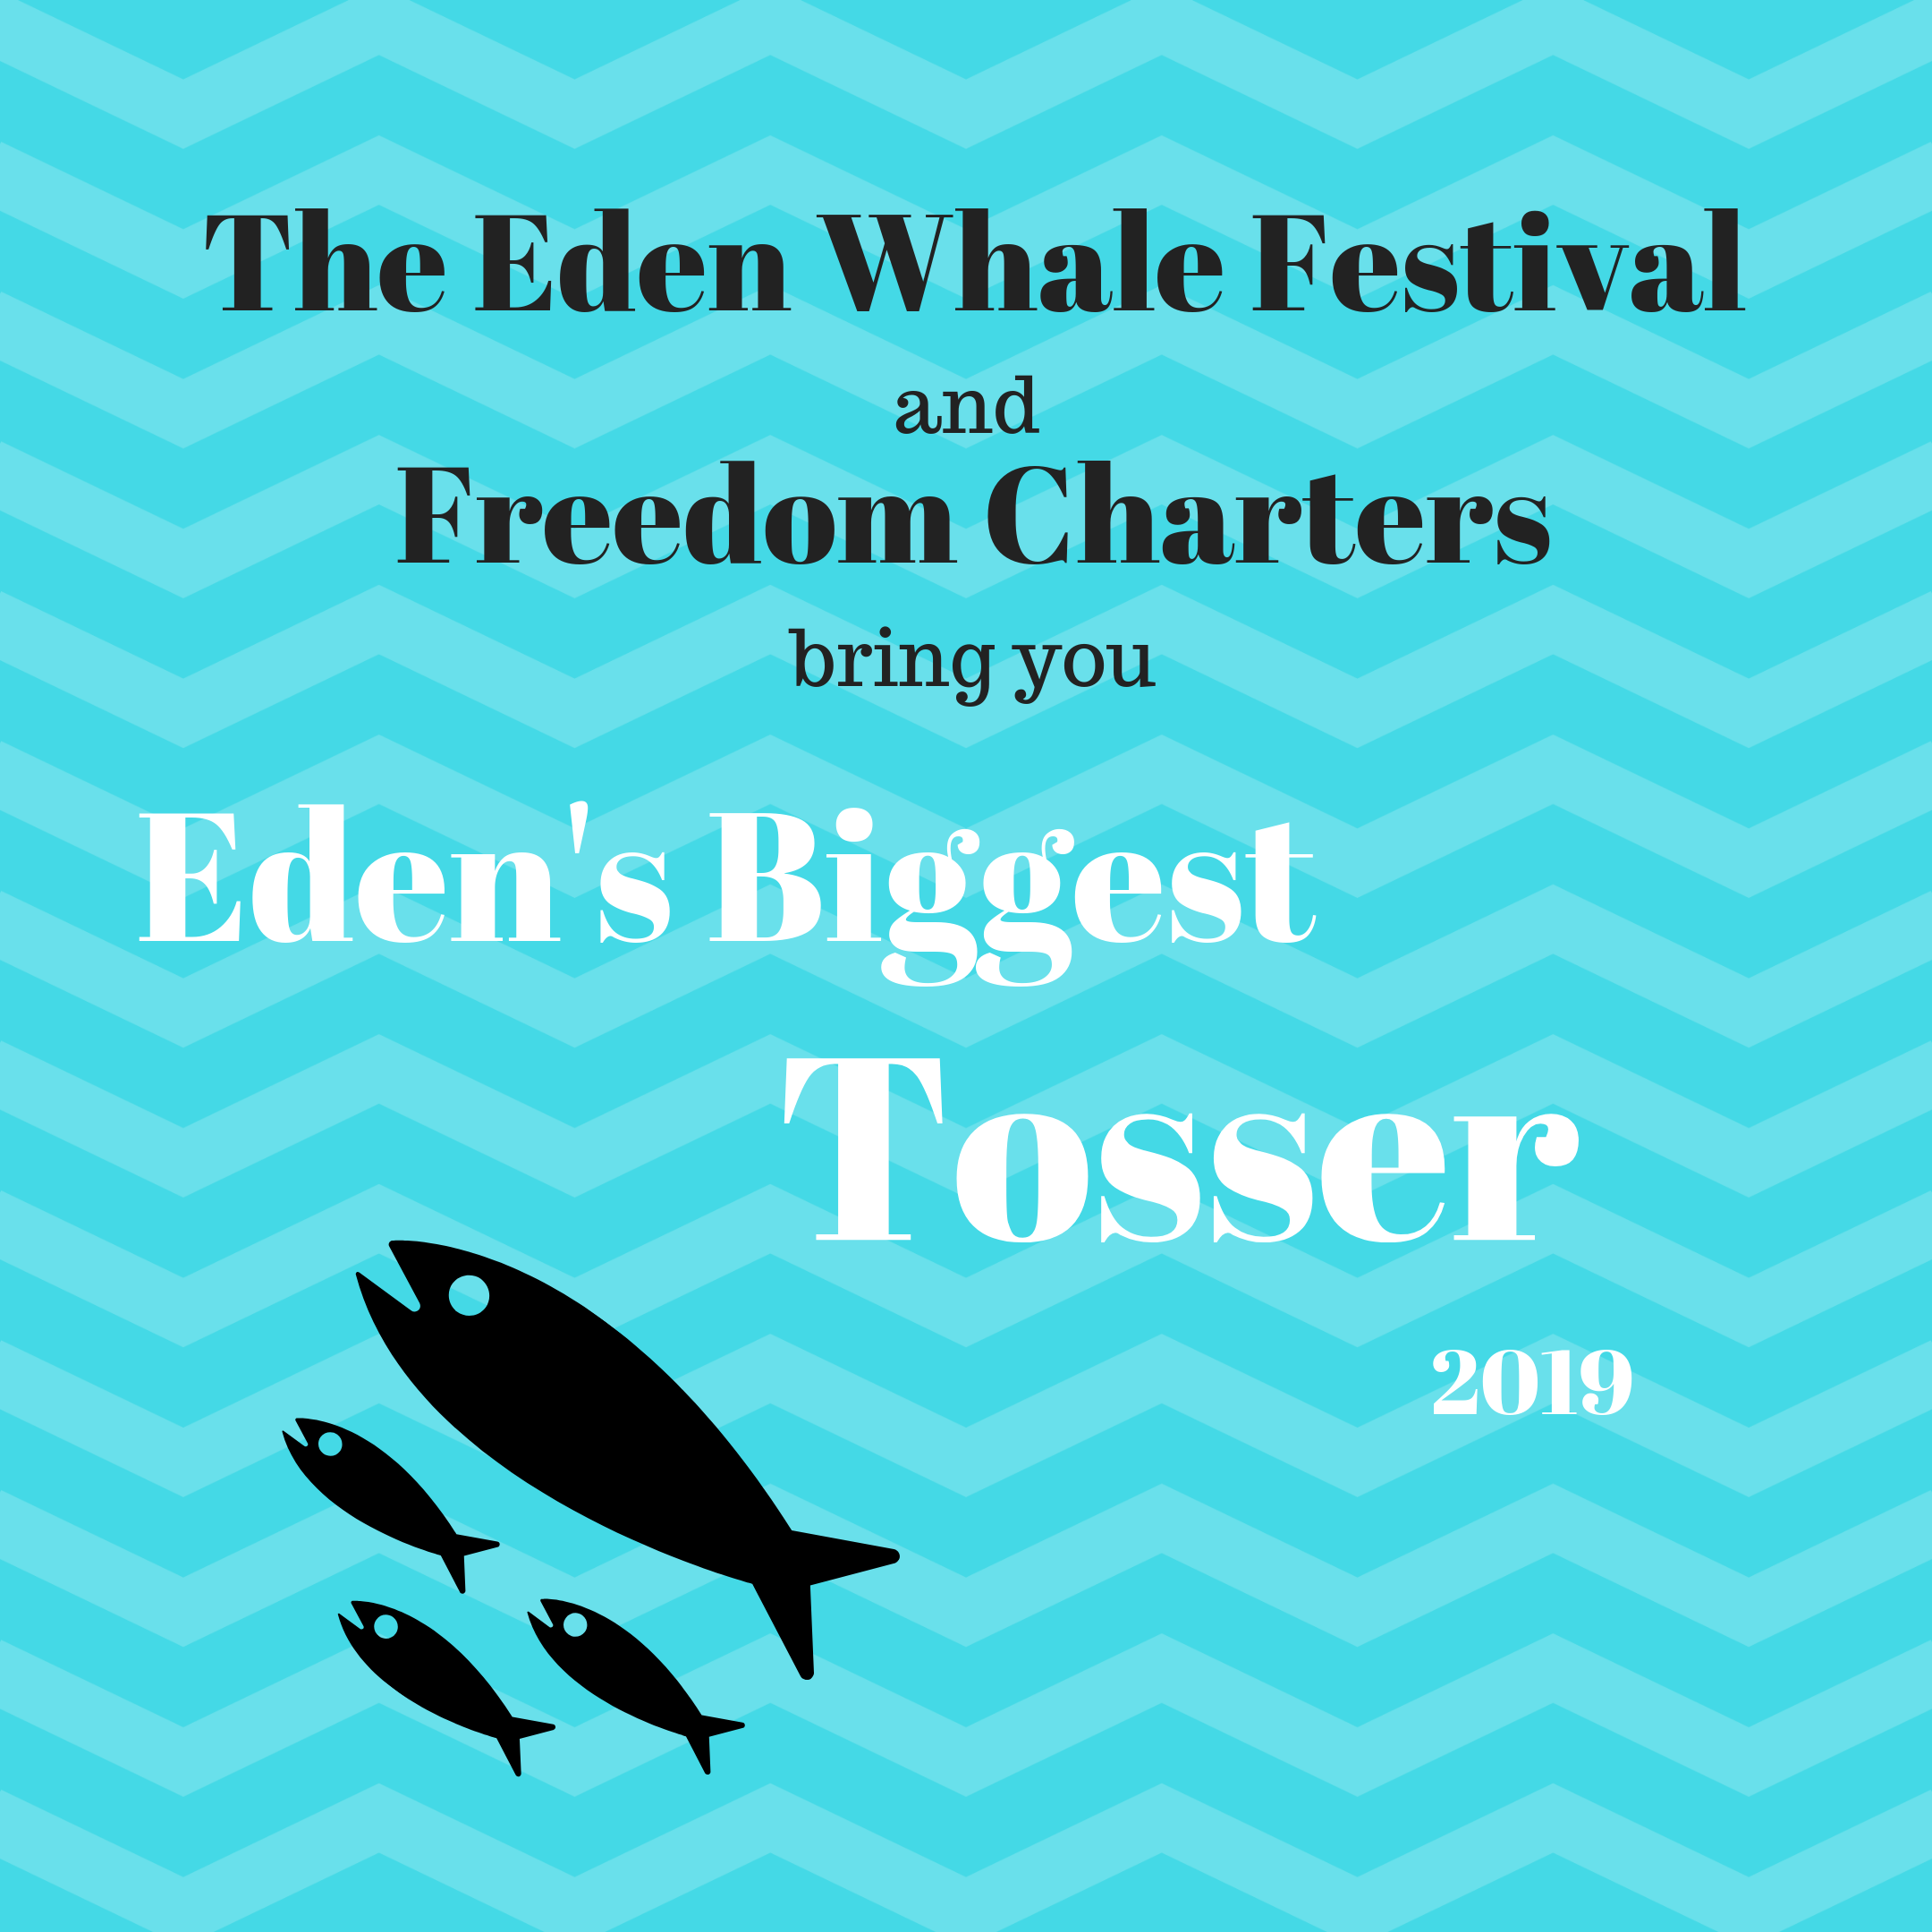 Are you Eden’s Biggest Tosser?